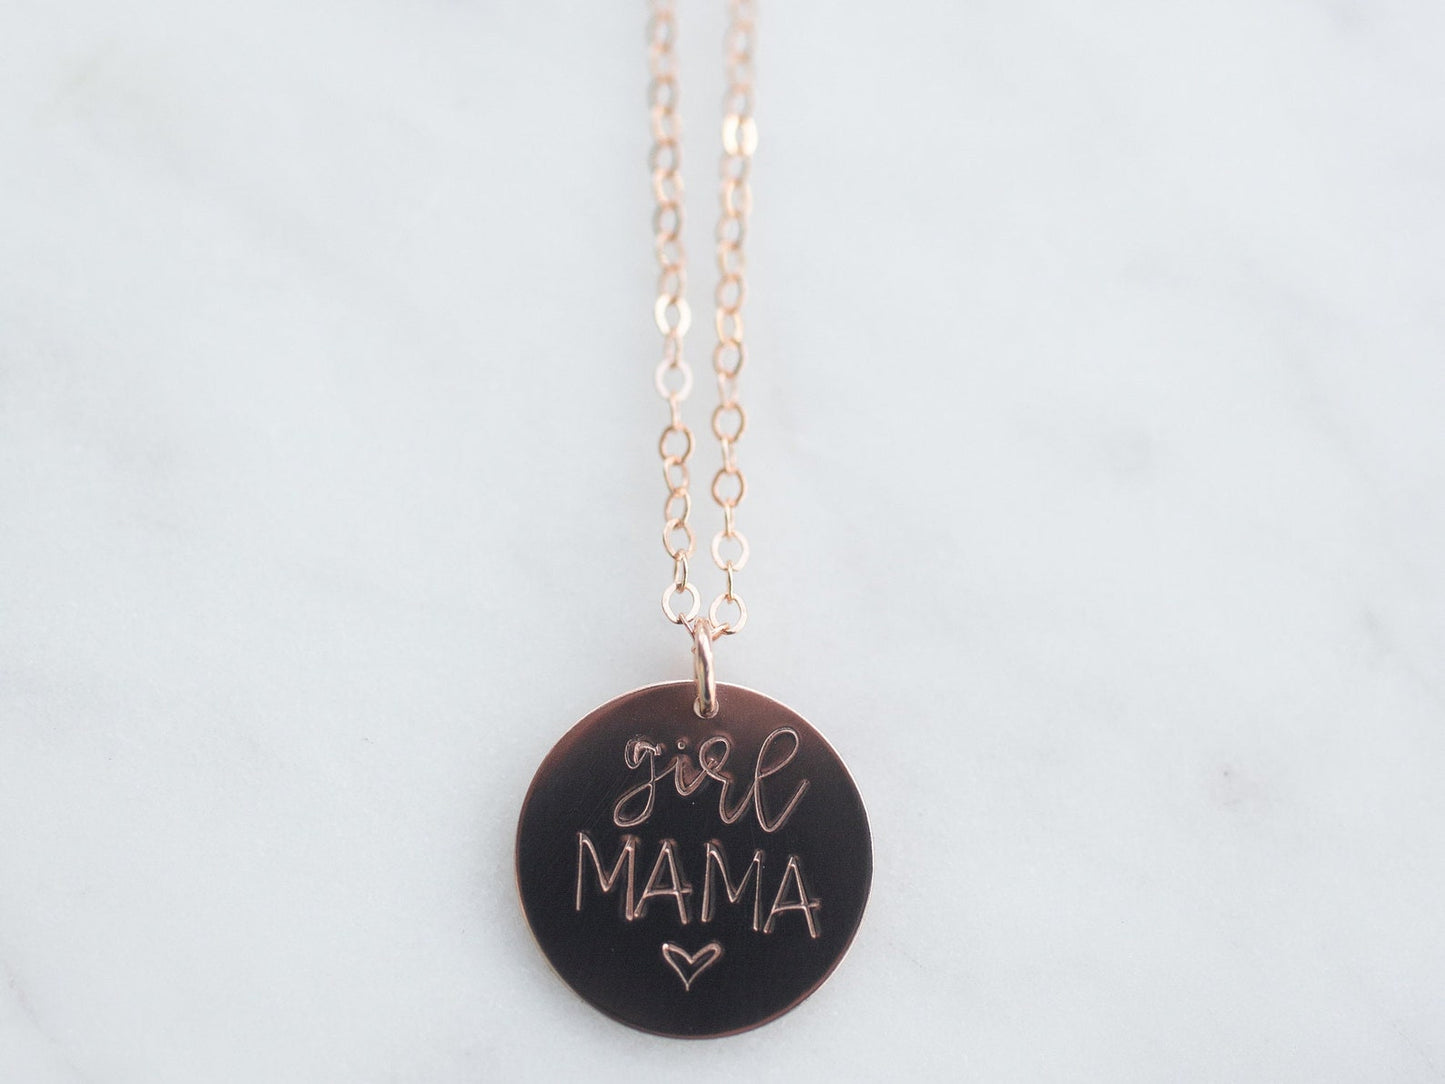 Girl Mama or Boy Mama Necklace